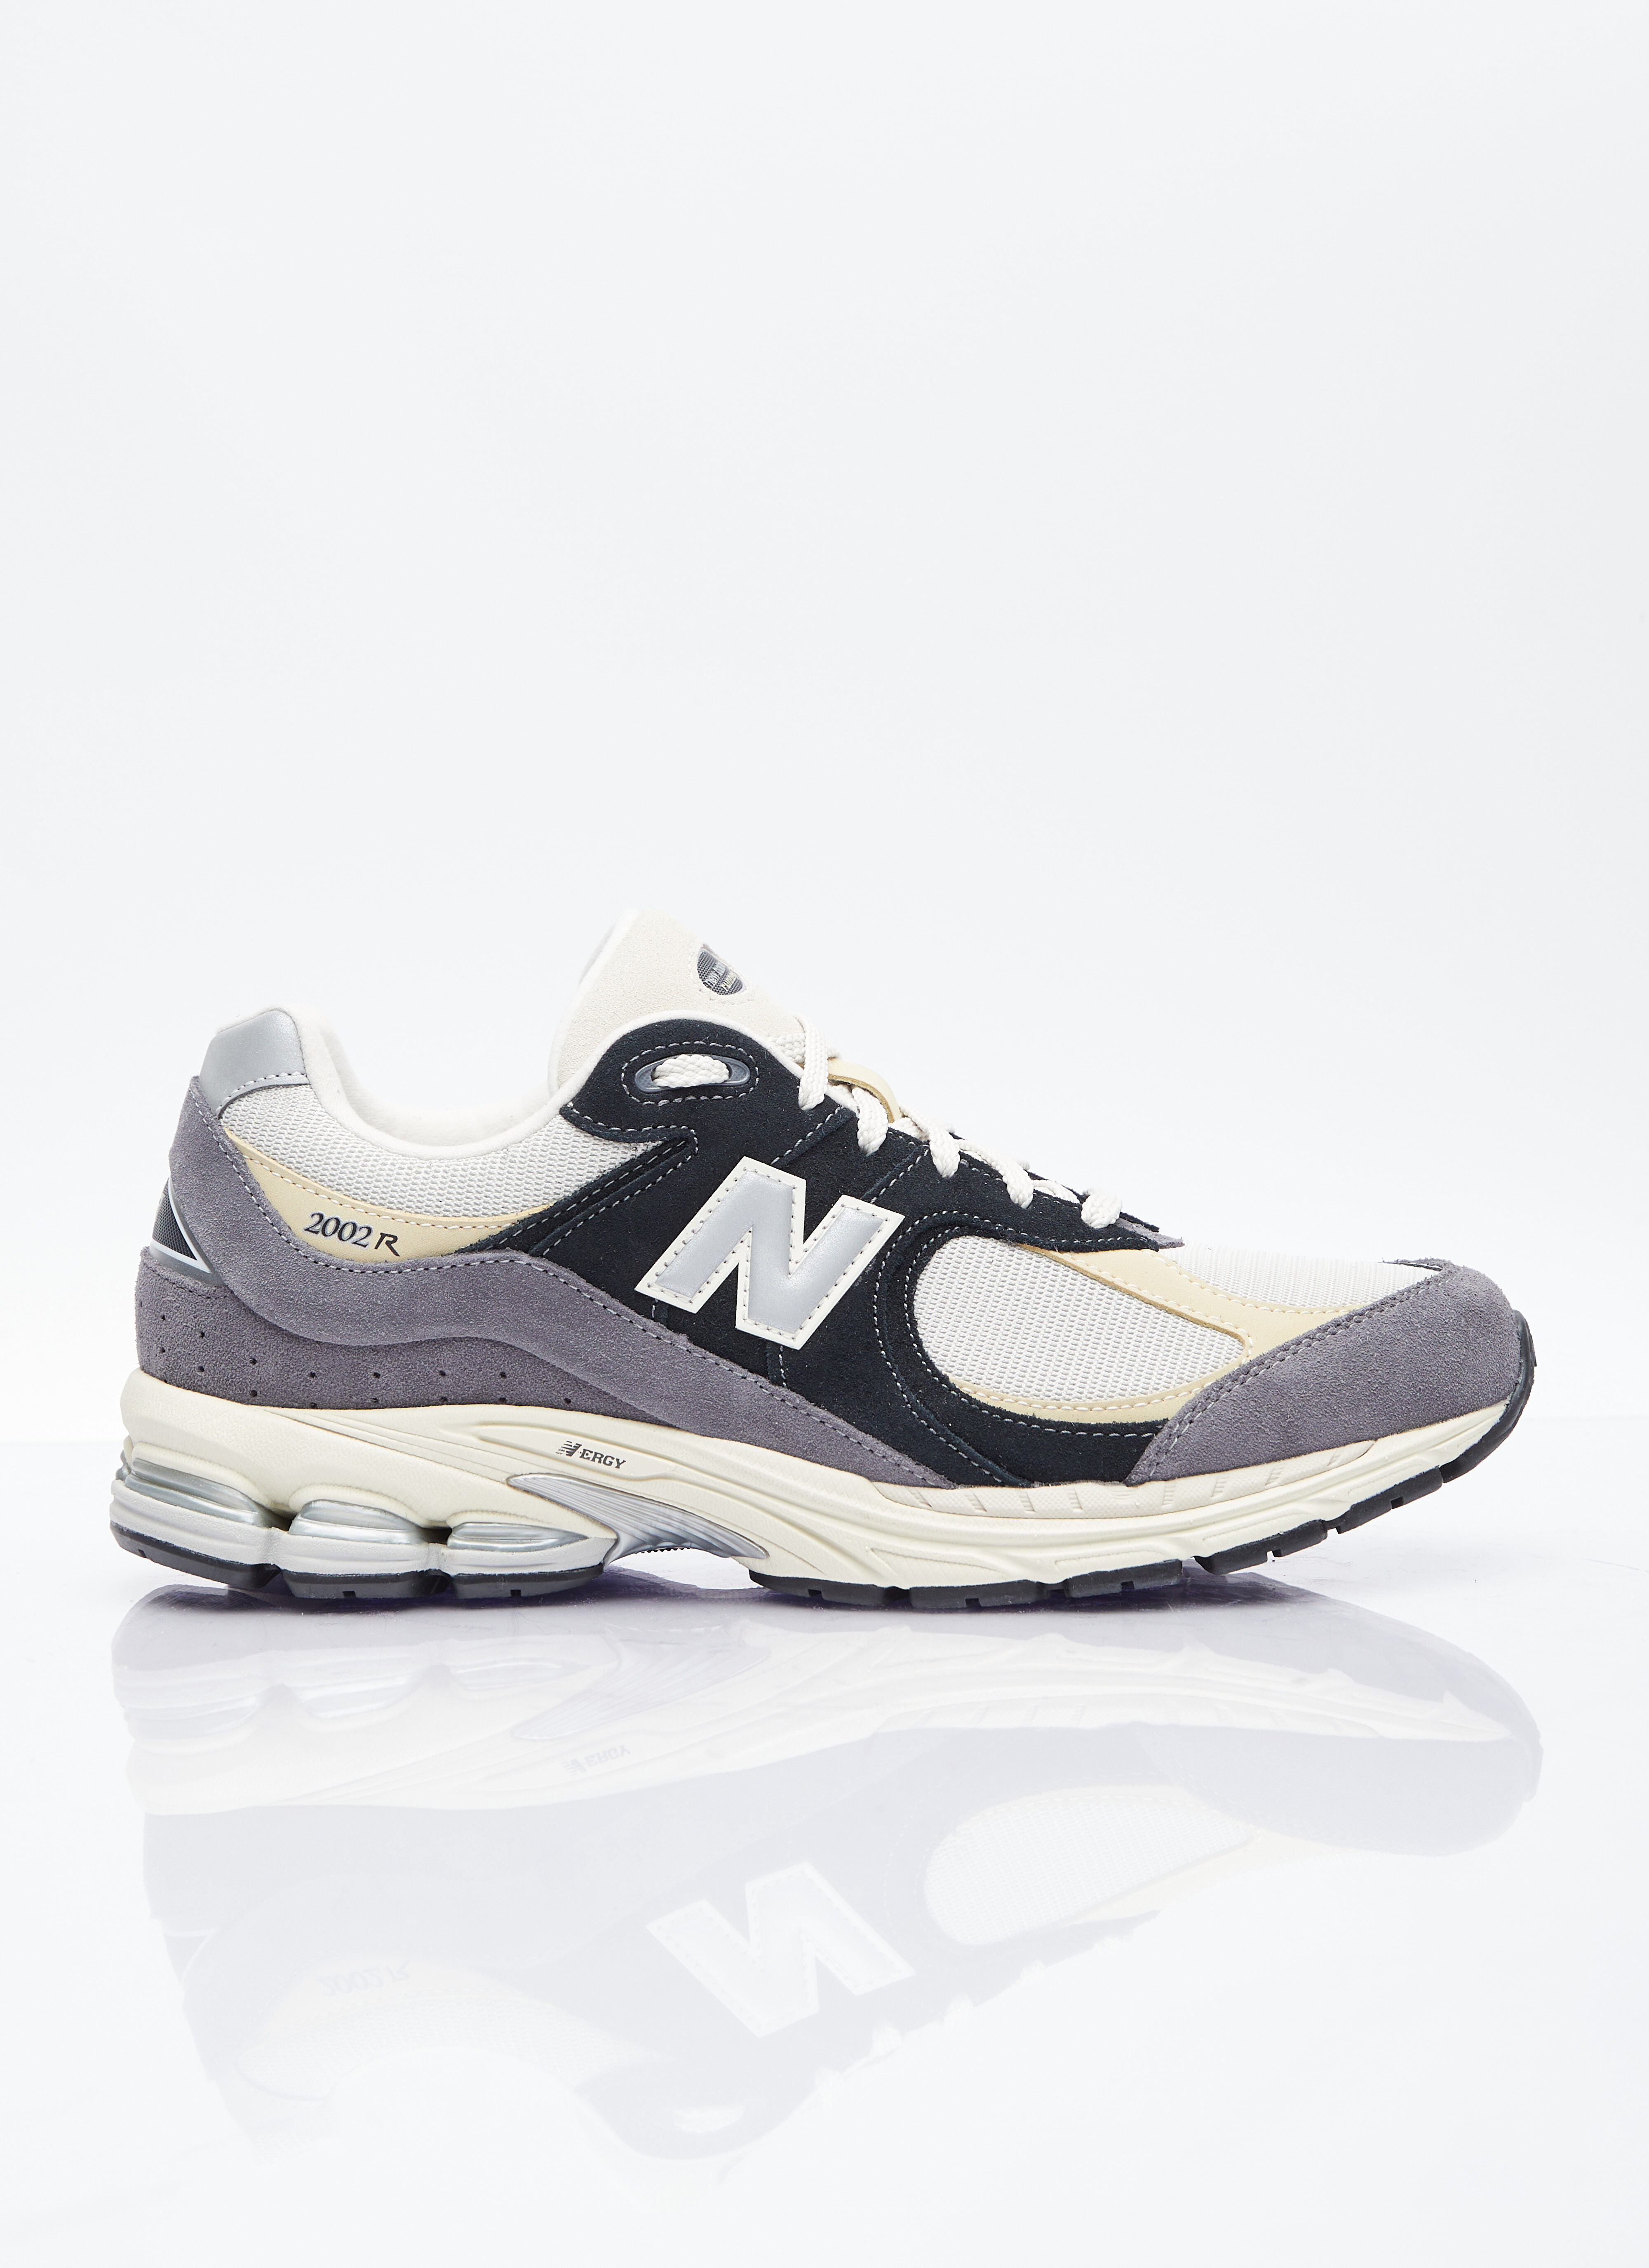 New Balance 2002R 运动鞋 灰色 new0254004